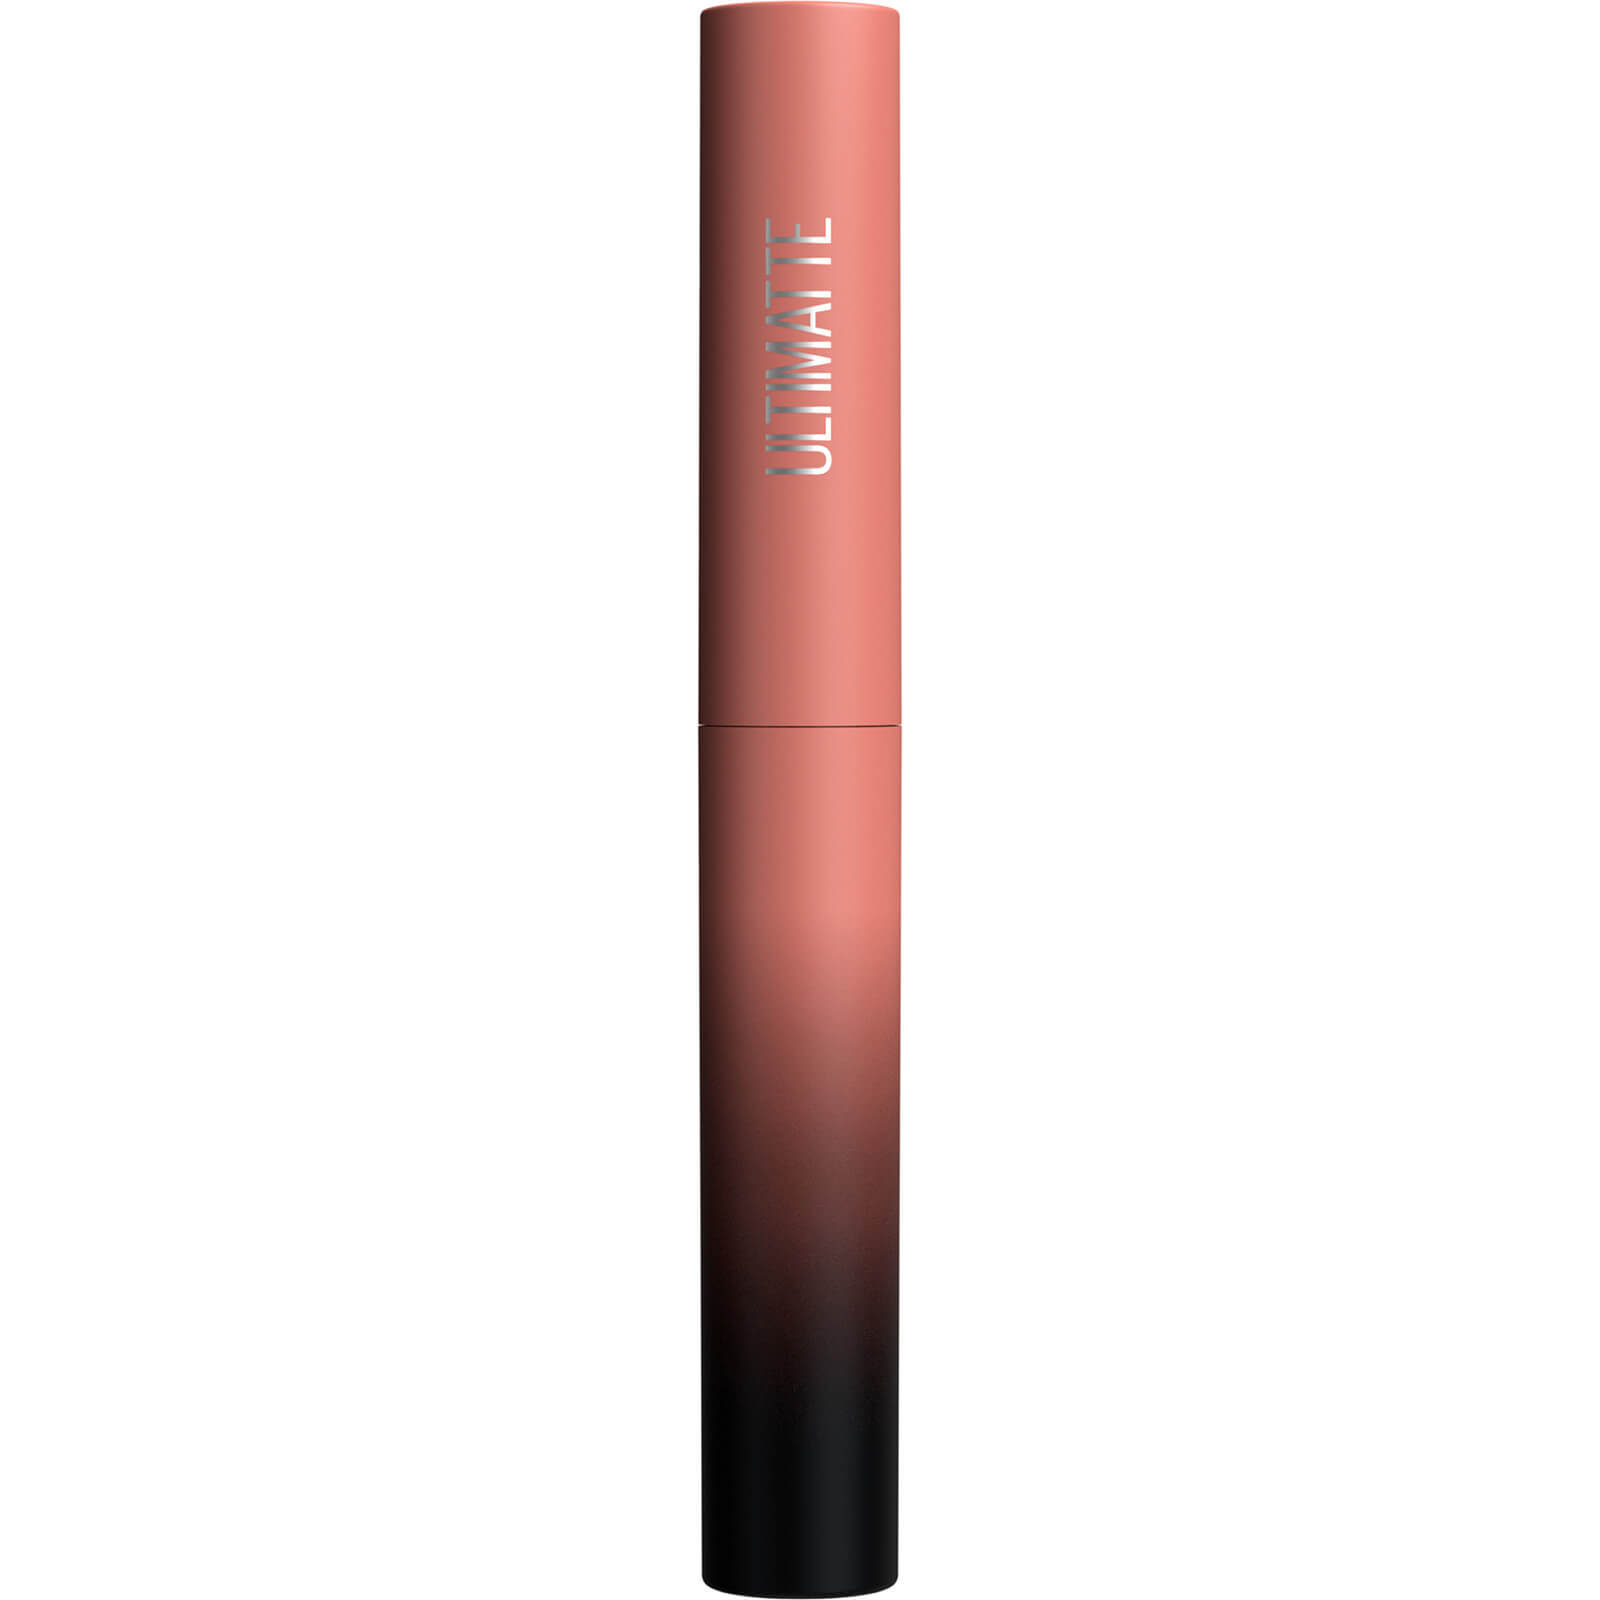 Maybelline Colour Sensational Ultimatte Slim Lipstick 25g (Various Shades) - More Buff